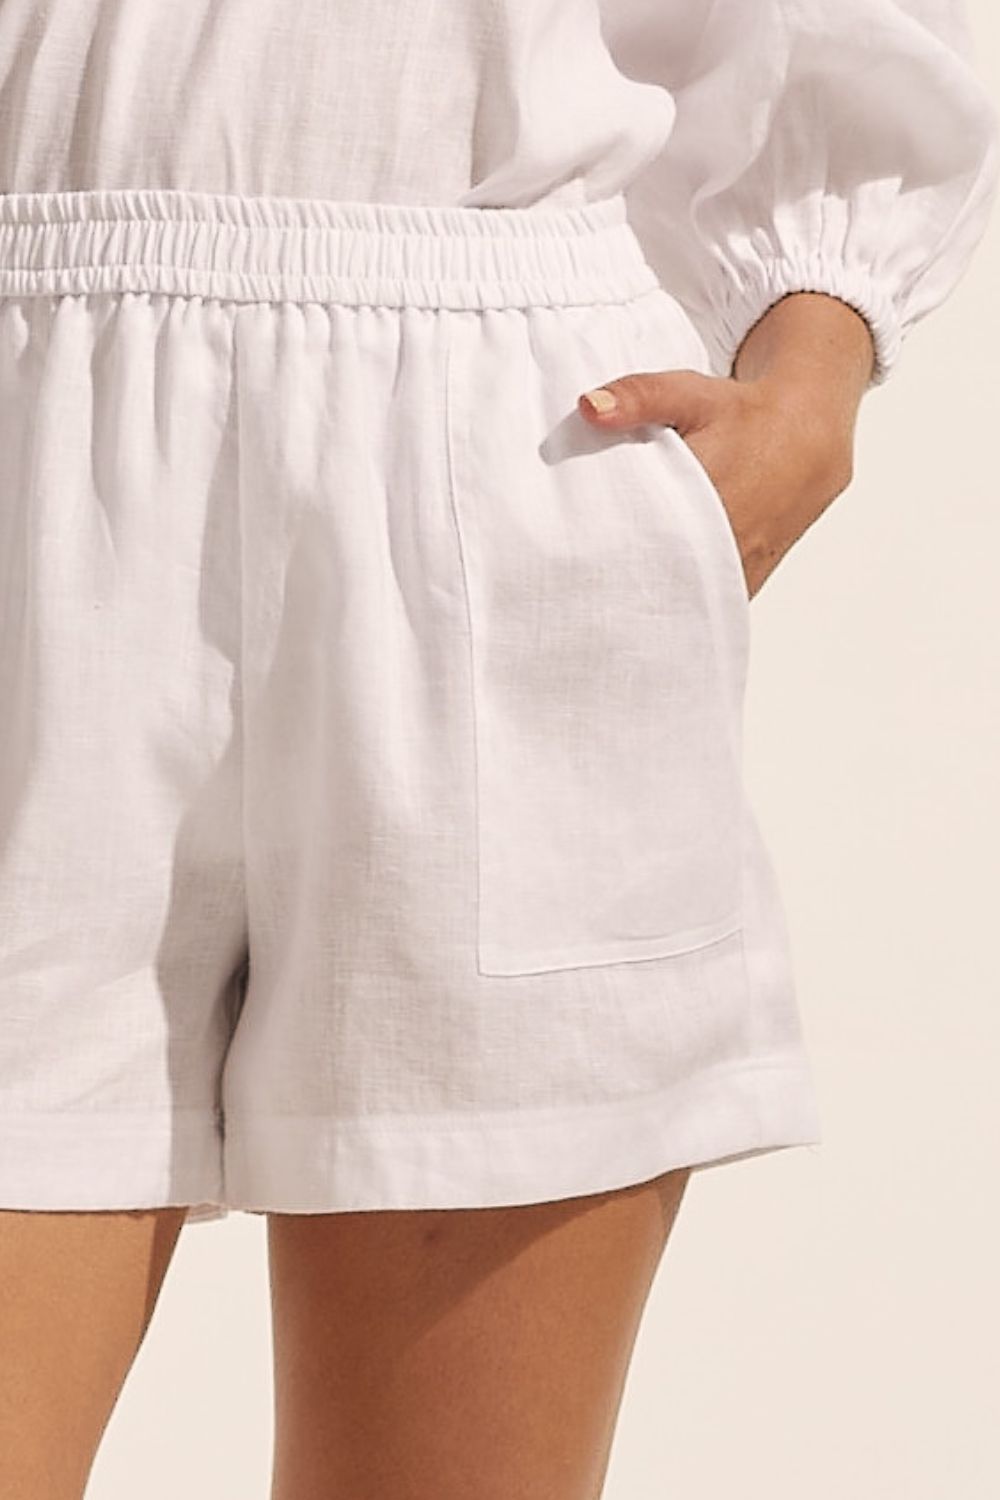 white, shorts, elasticated waist, side pockets, top stitching, close up image